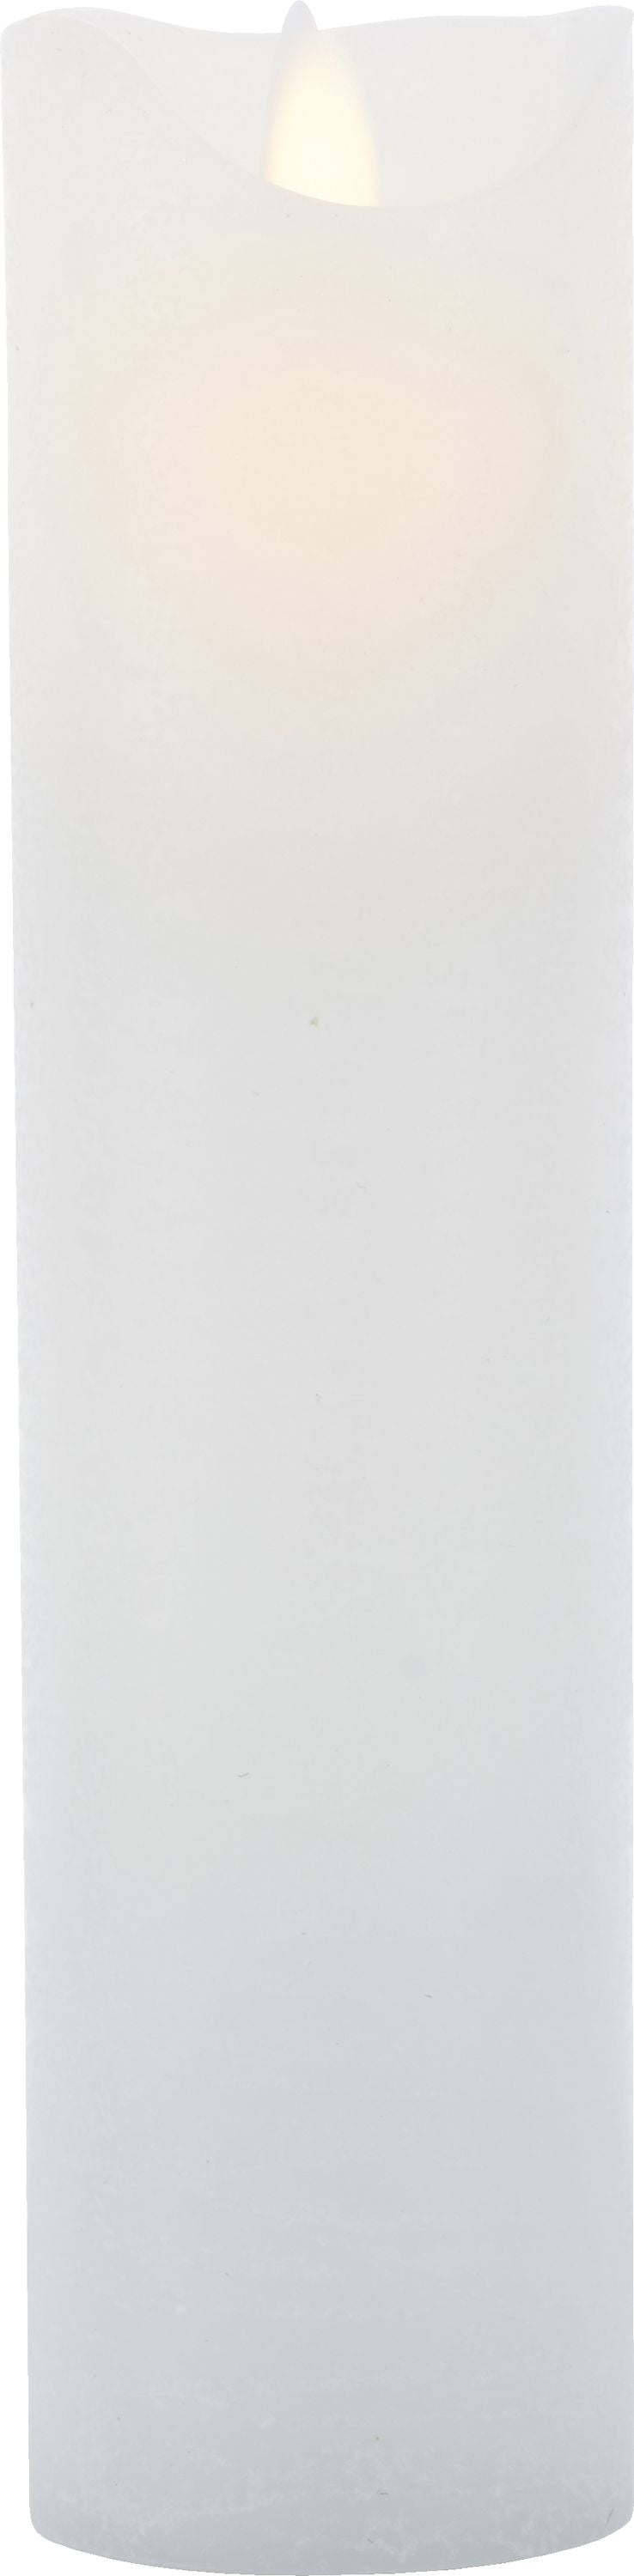 Sirius Sara oplaadbaar Led Candle White, Ø7,5x H25cm